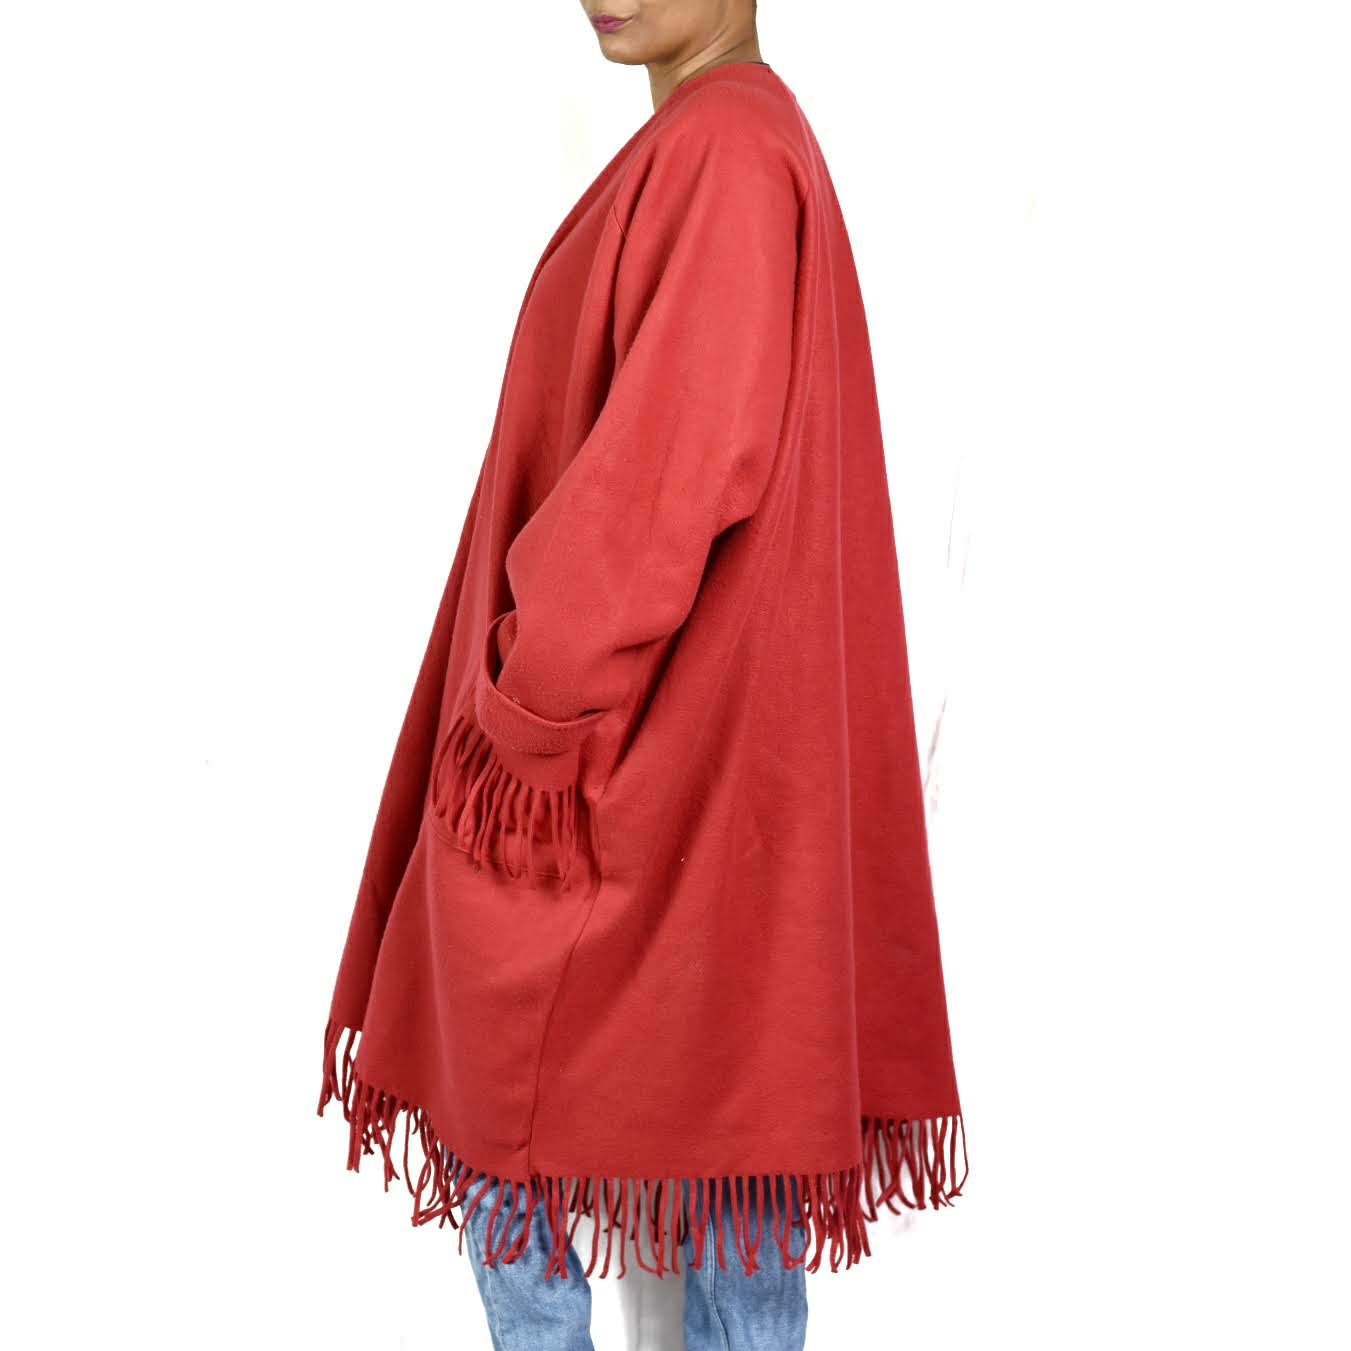 Avon Fleece Blanket Coat Size 2X